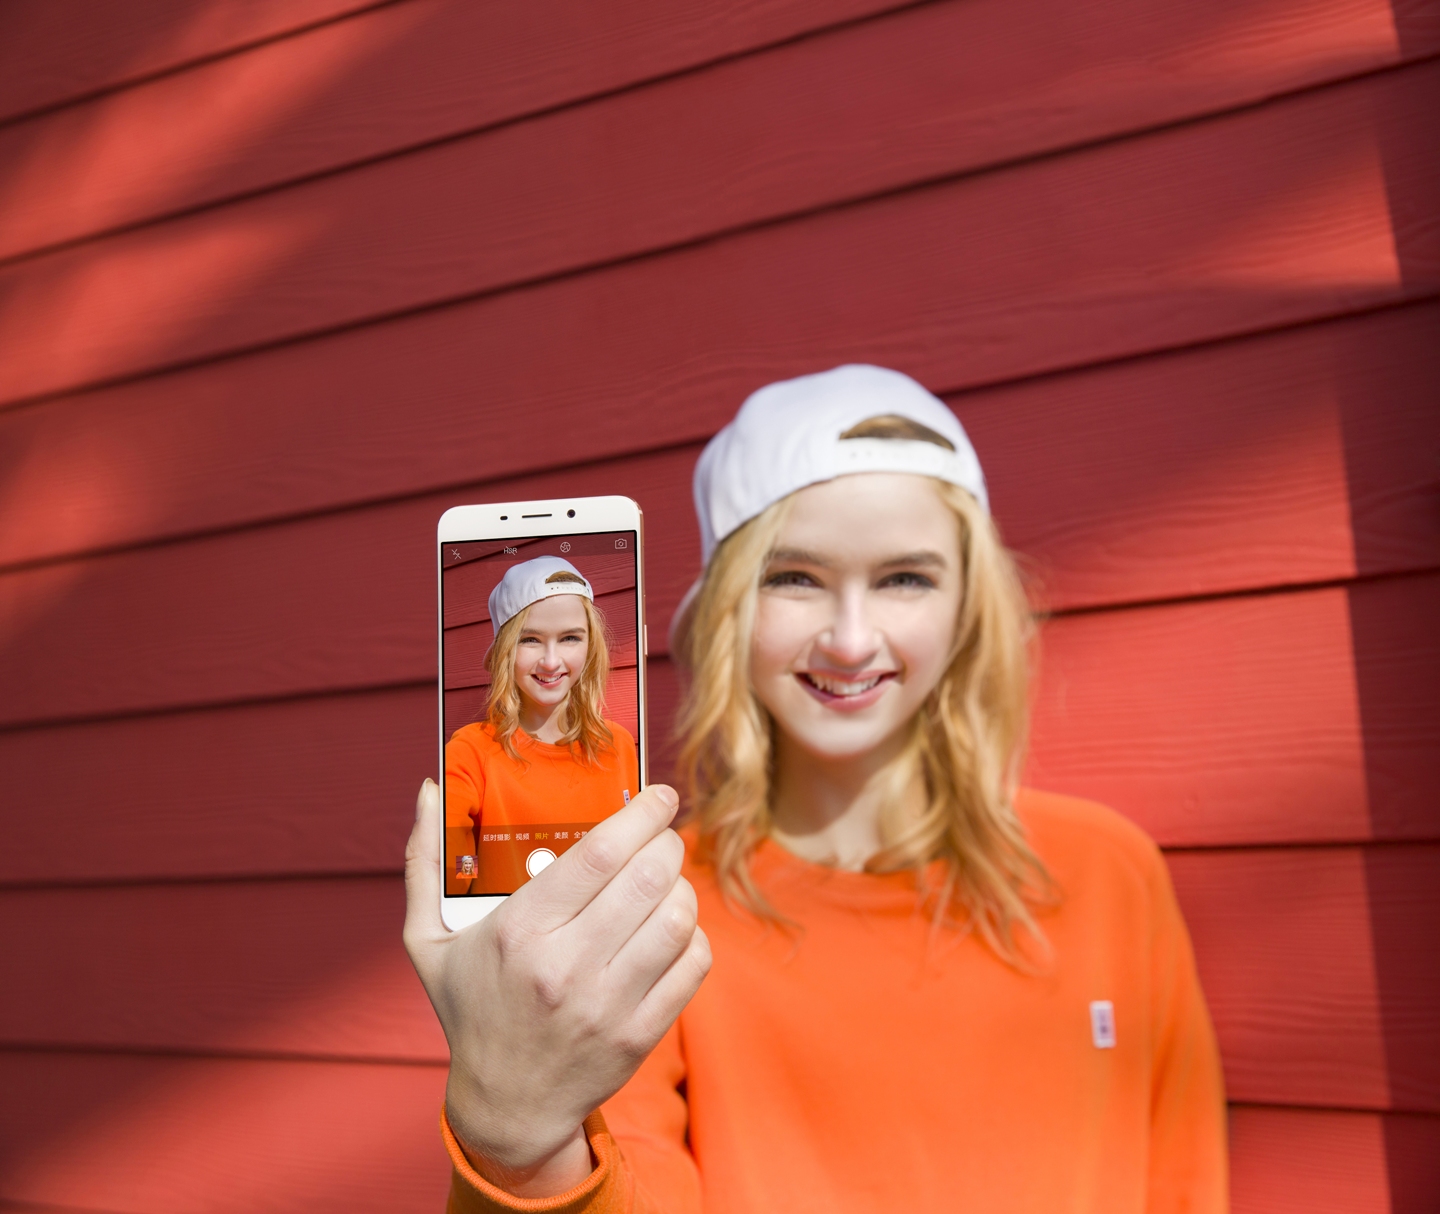 Selfie 1. Селфи на фоне желтого цвета. Девушка селфи в оранжевом. Оппо реклама с девушкой. Оппо а96 селфи фото.